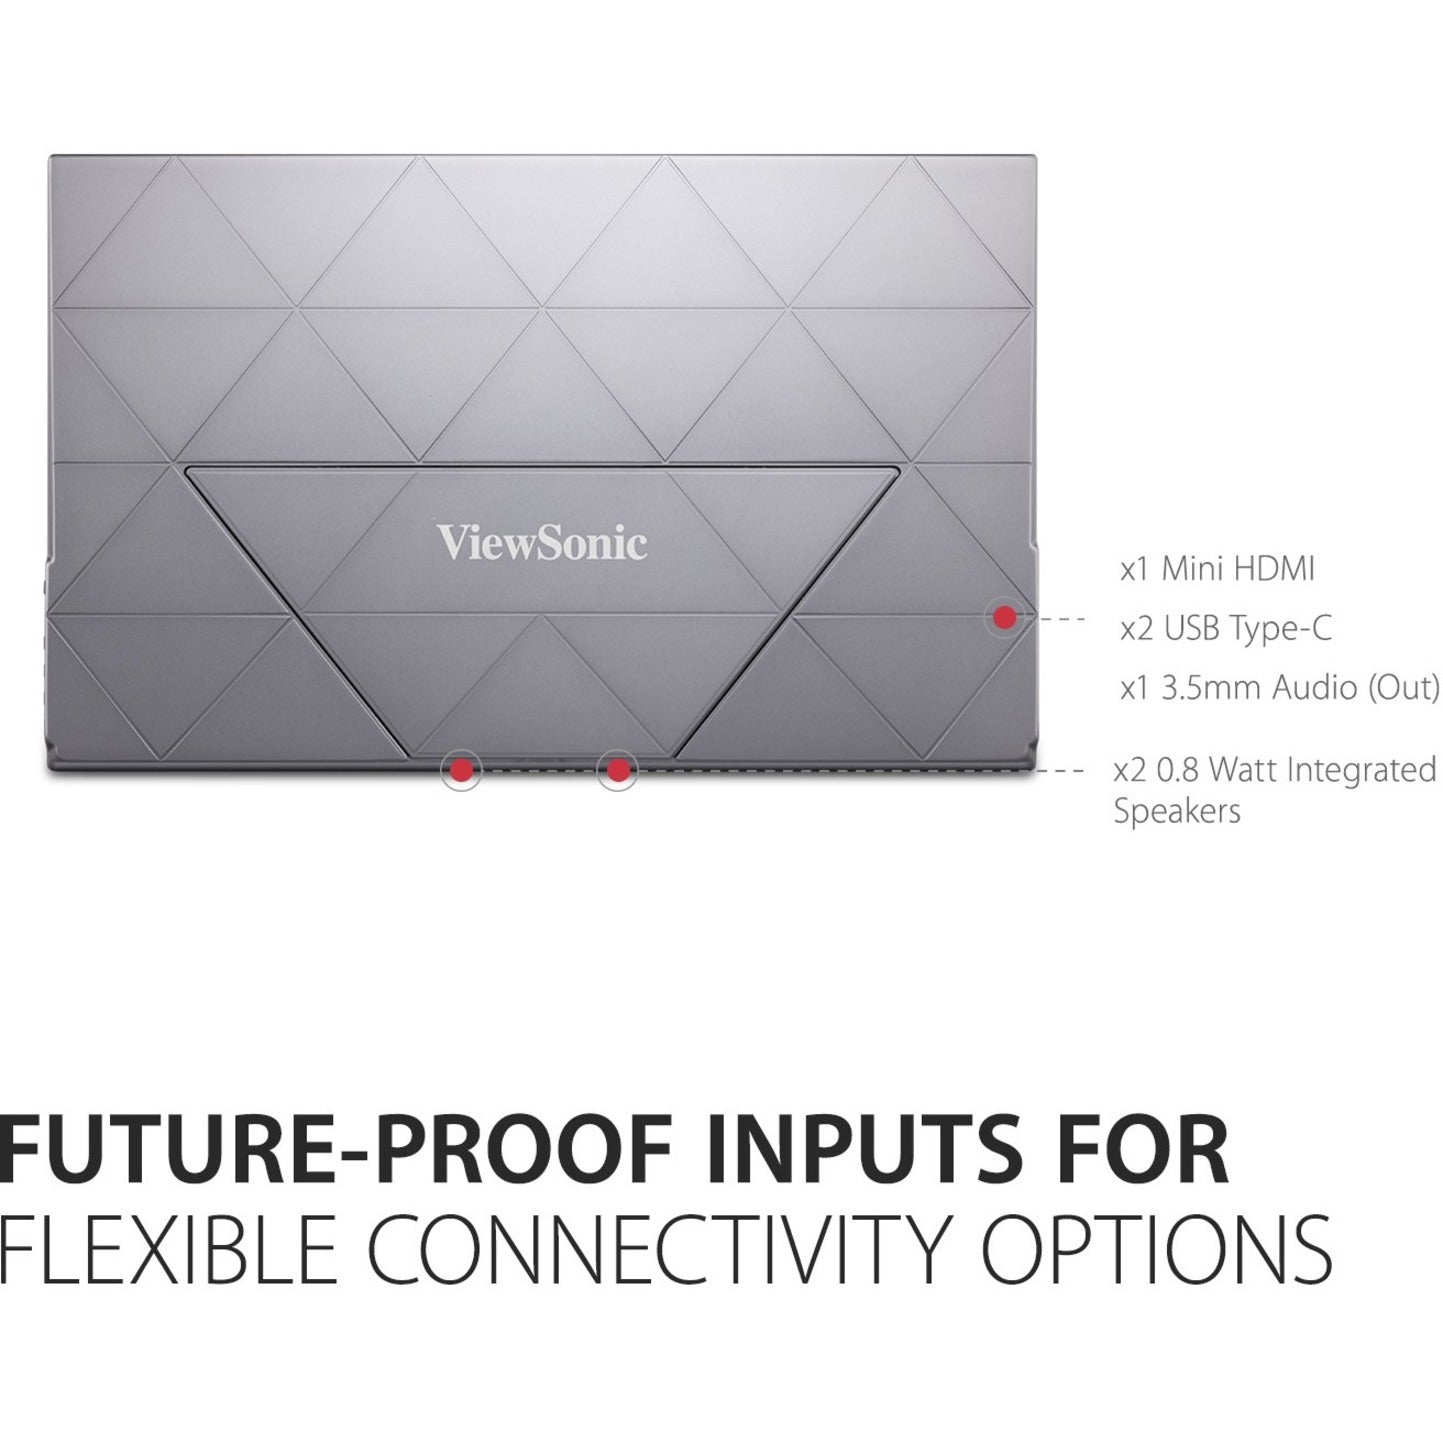 ViewSonic VX1755 17" Portable IPS Gaming Monitor, 144Hz Refresh Rate, AMD FreeSync Premium